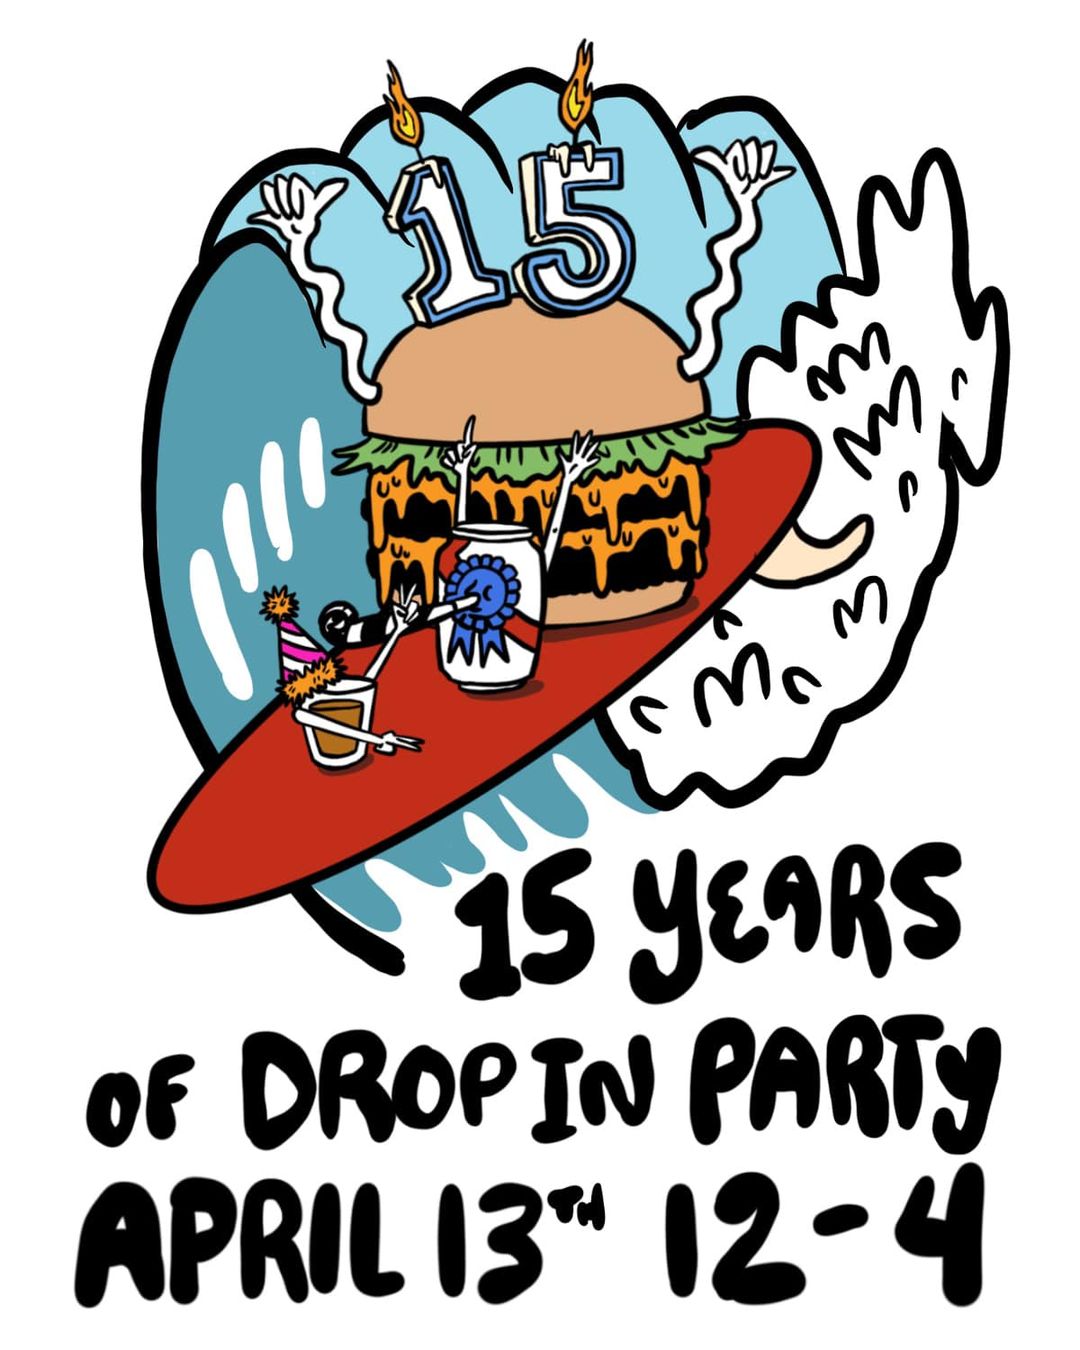 Drop In Party